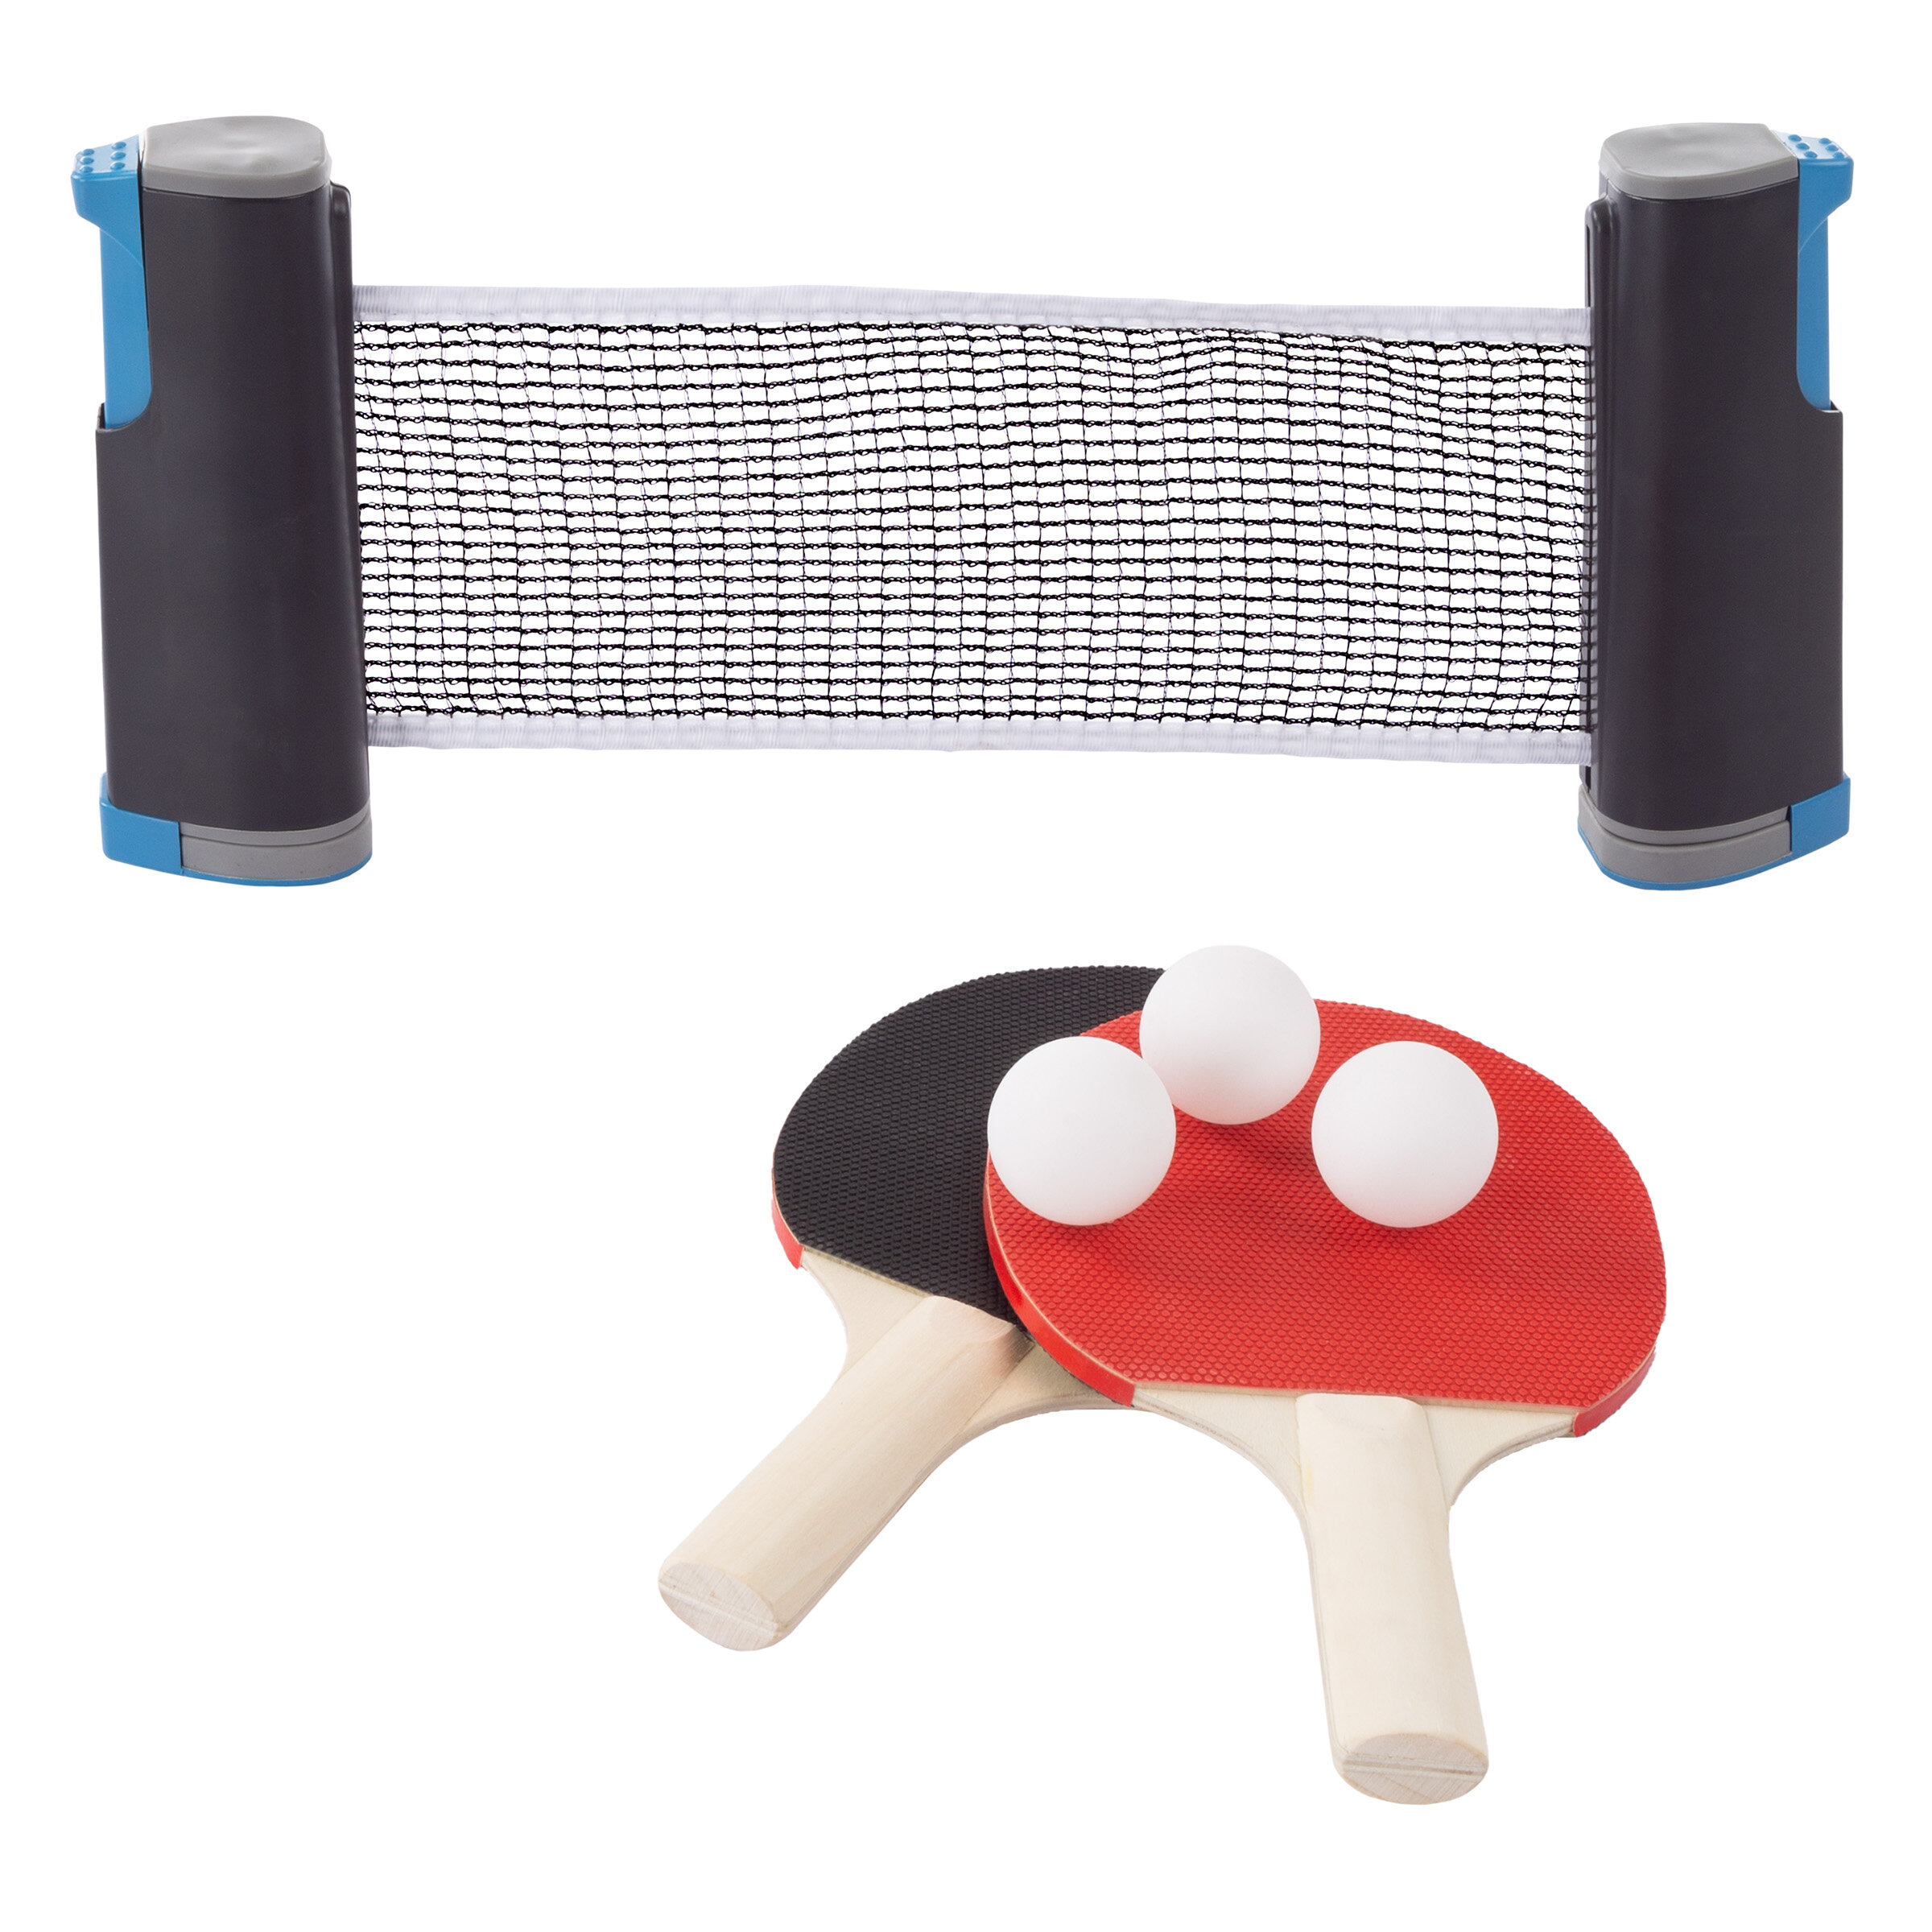 Lot Table Tennis Balls Ping Pong Advanced Tournaments Material ABS Kit 6pcs 